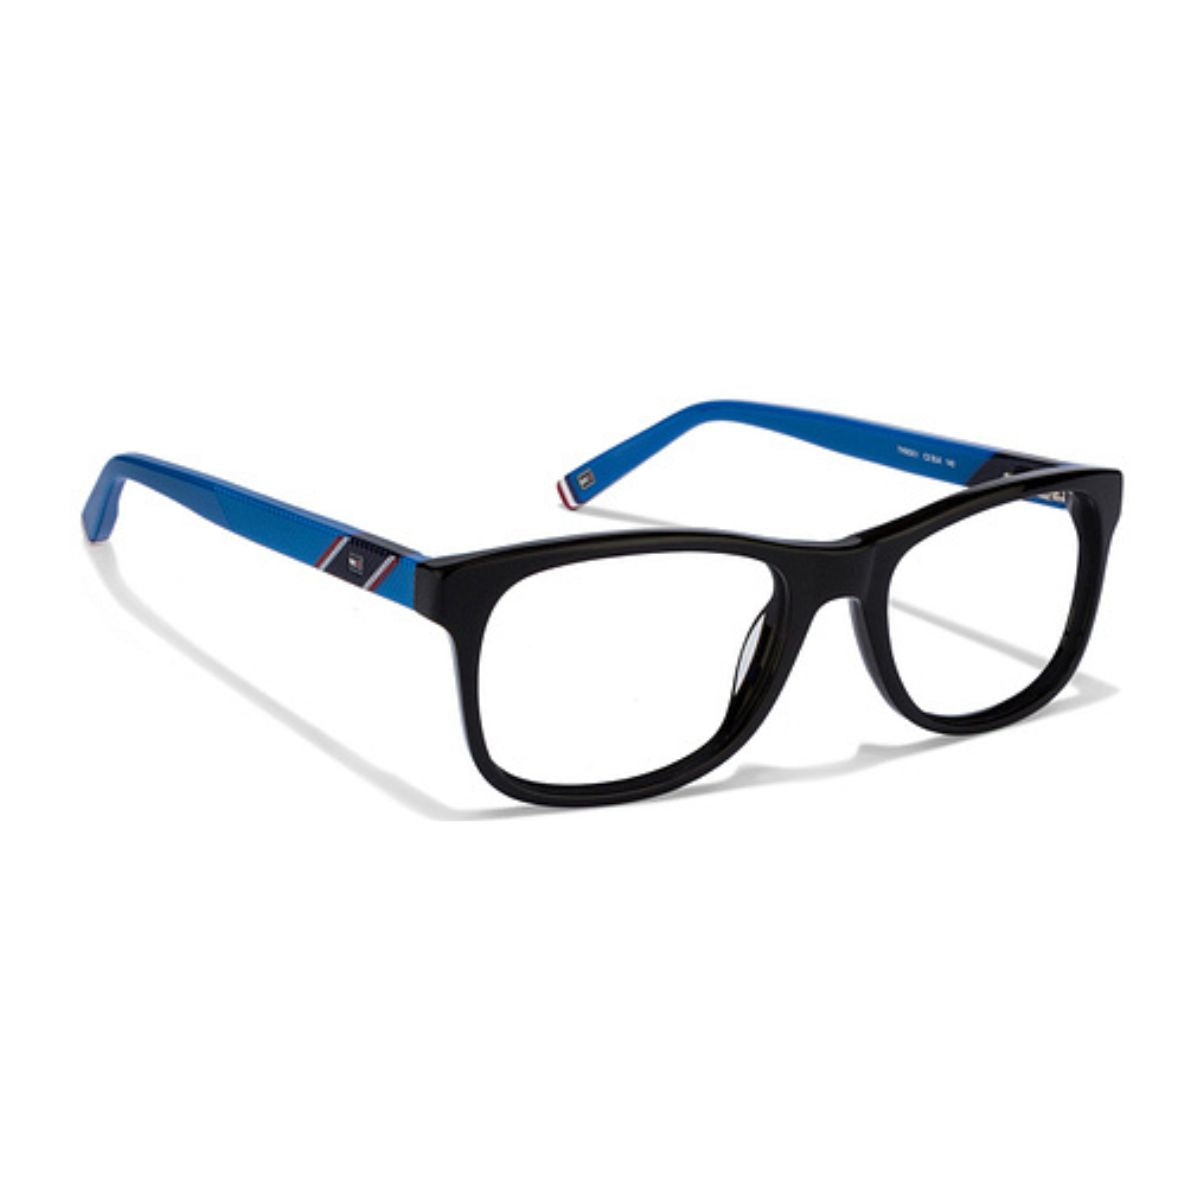 "bestTommy Hilfiger 5630 C2 stylish eyesight frame for men's and women's at optorium"